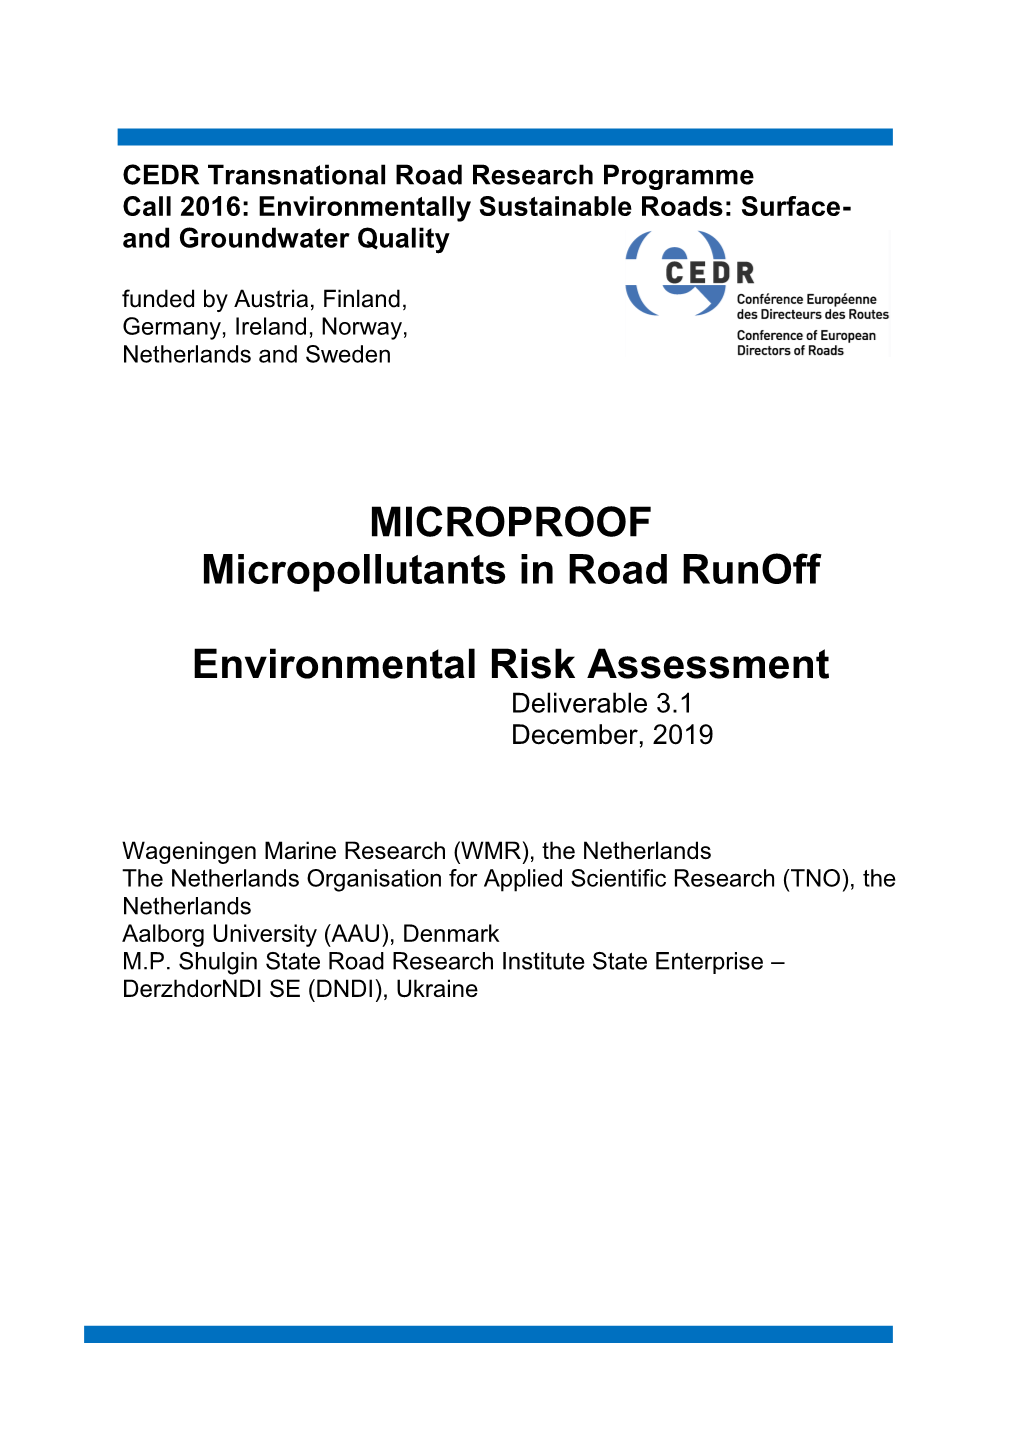 MICROPROOF Micropollutants in Road Runoff